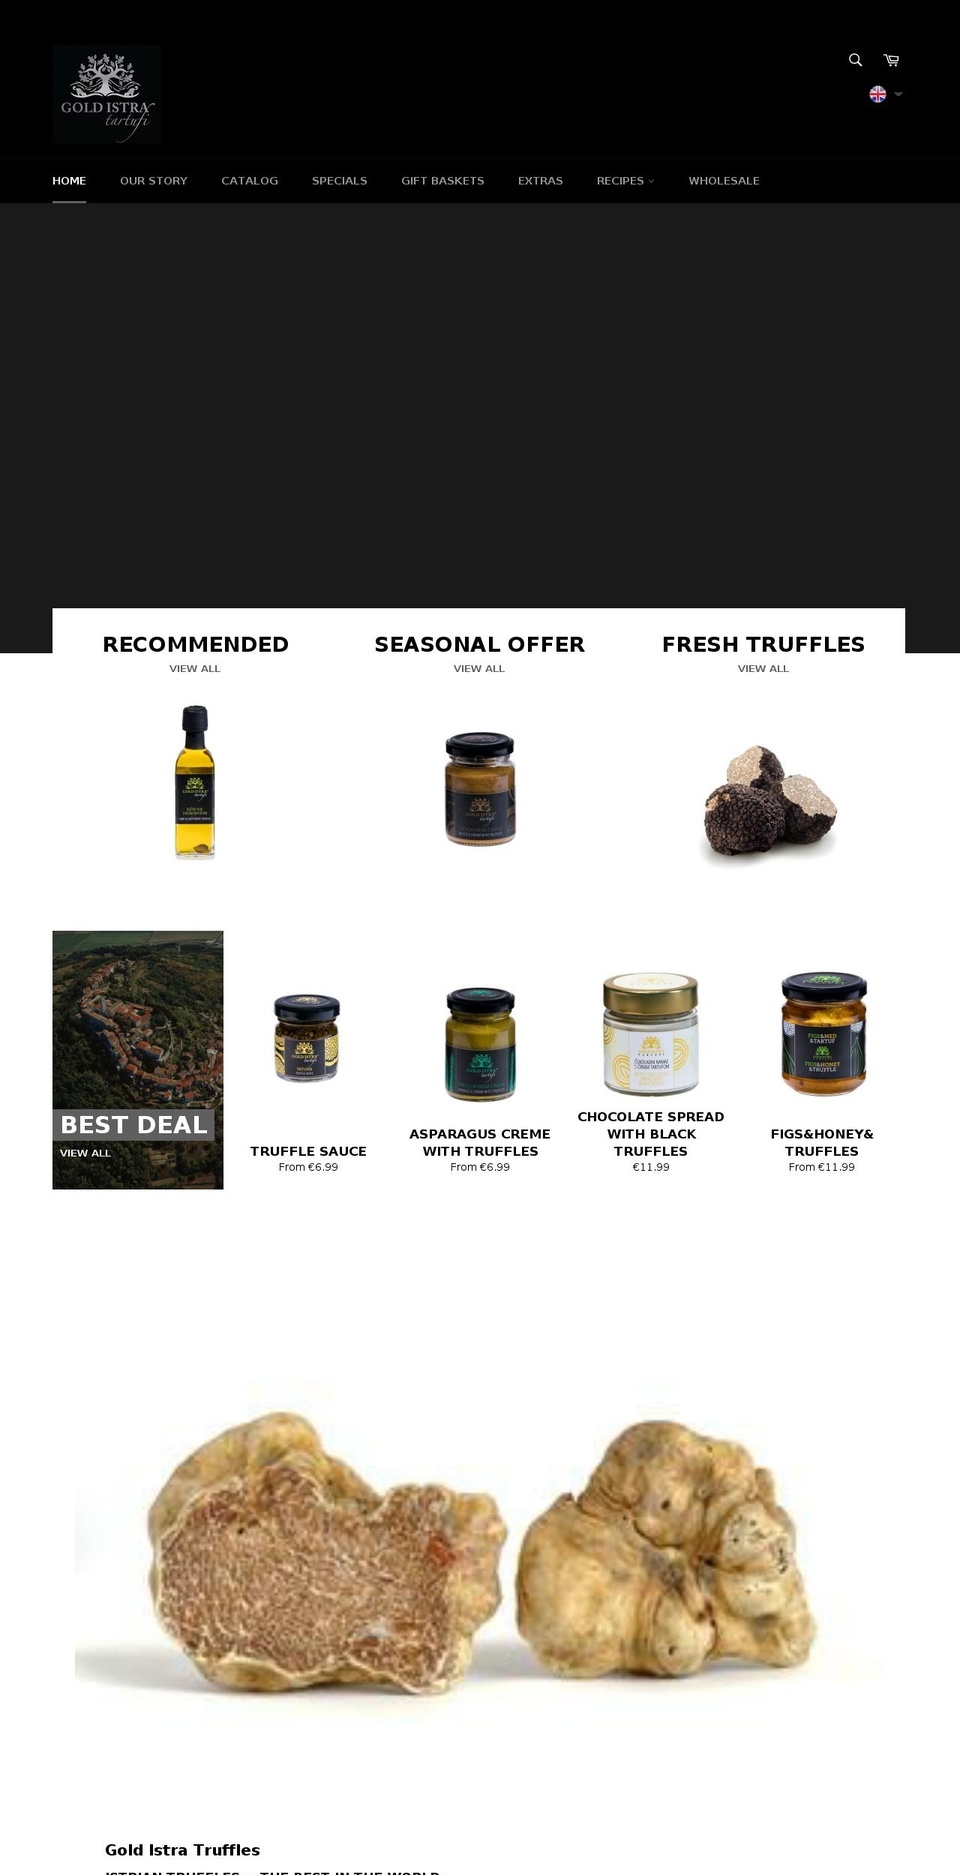 Gold Istra truffles Shopify theme site example tartufi.si